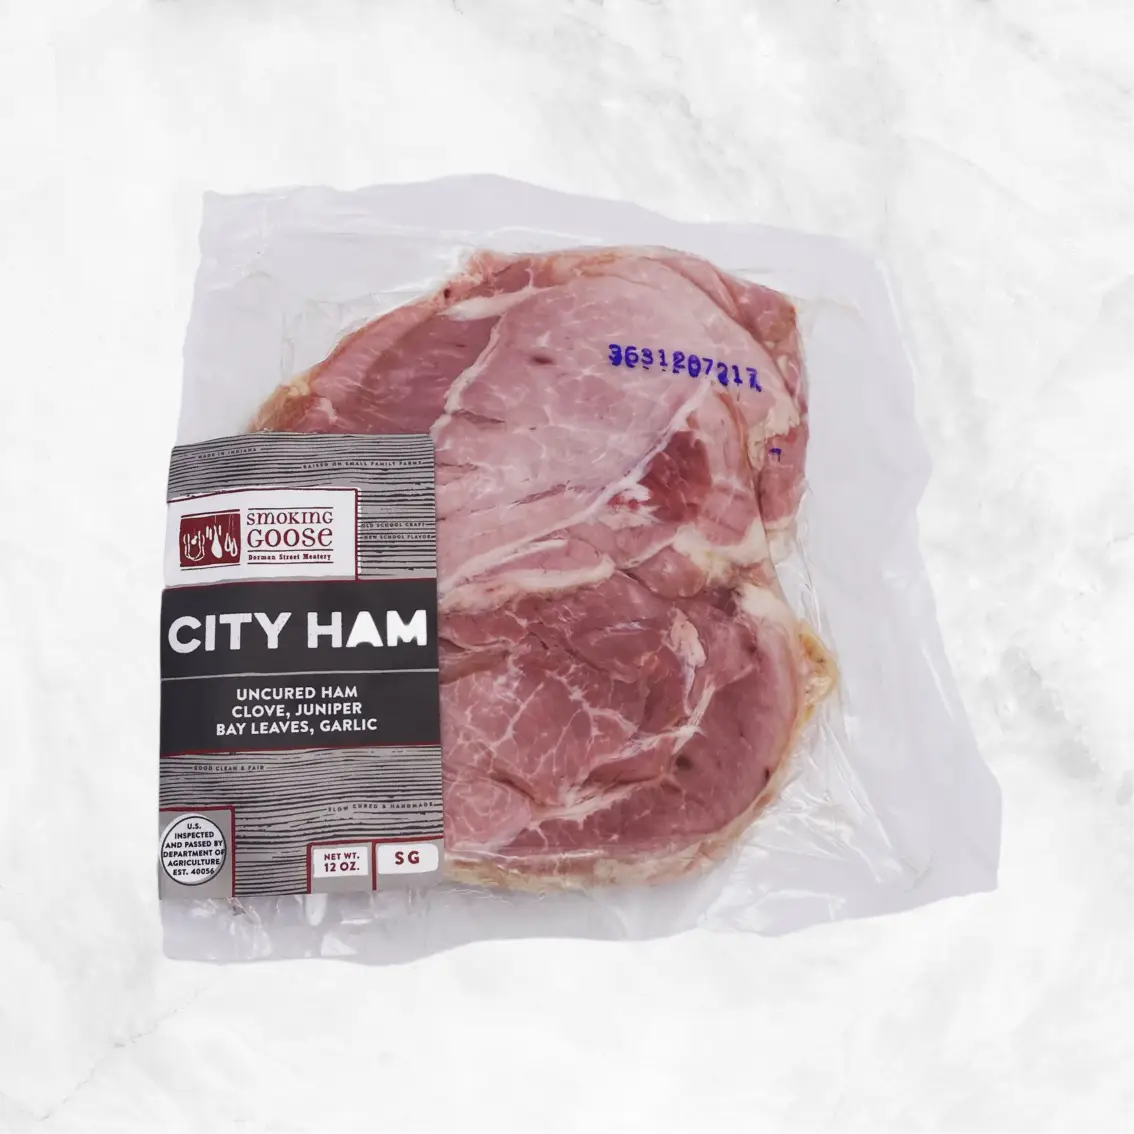 Sliced City Ham